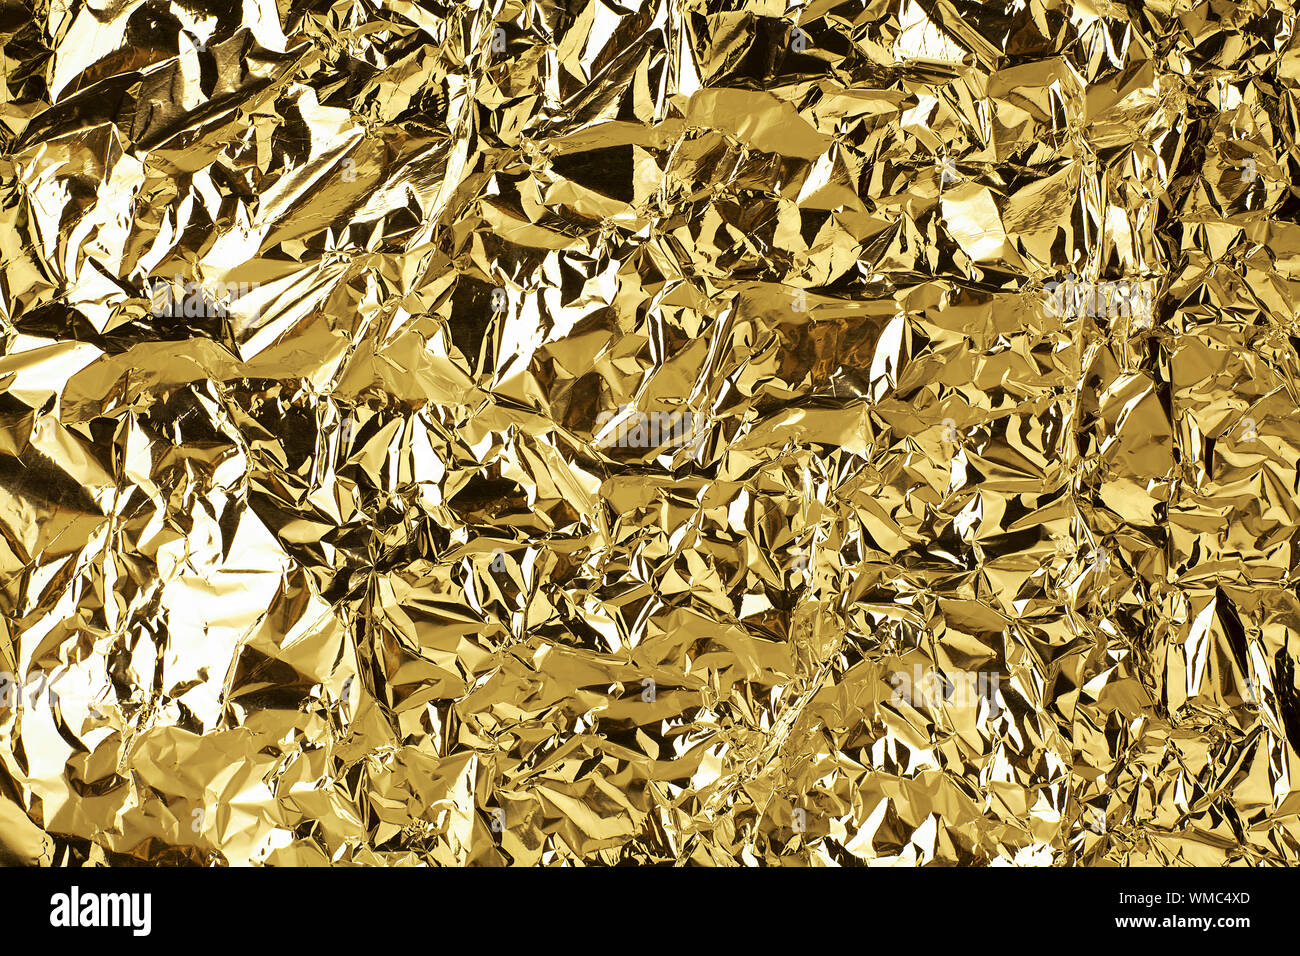 https://c8.alamy.com/comp/WMC4XD/crumpled-golden-foil-shining-texture-background-bright-shiny-gold-luxury-design-metallic-glitter-surface-holiday-decoration-backdrop-concept-gold-WMC4XD.jpg